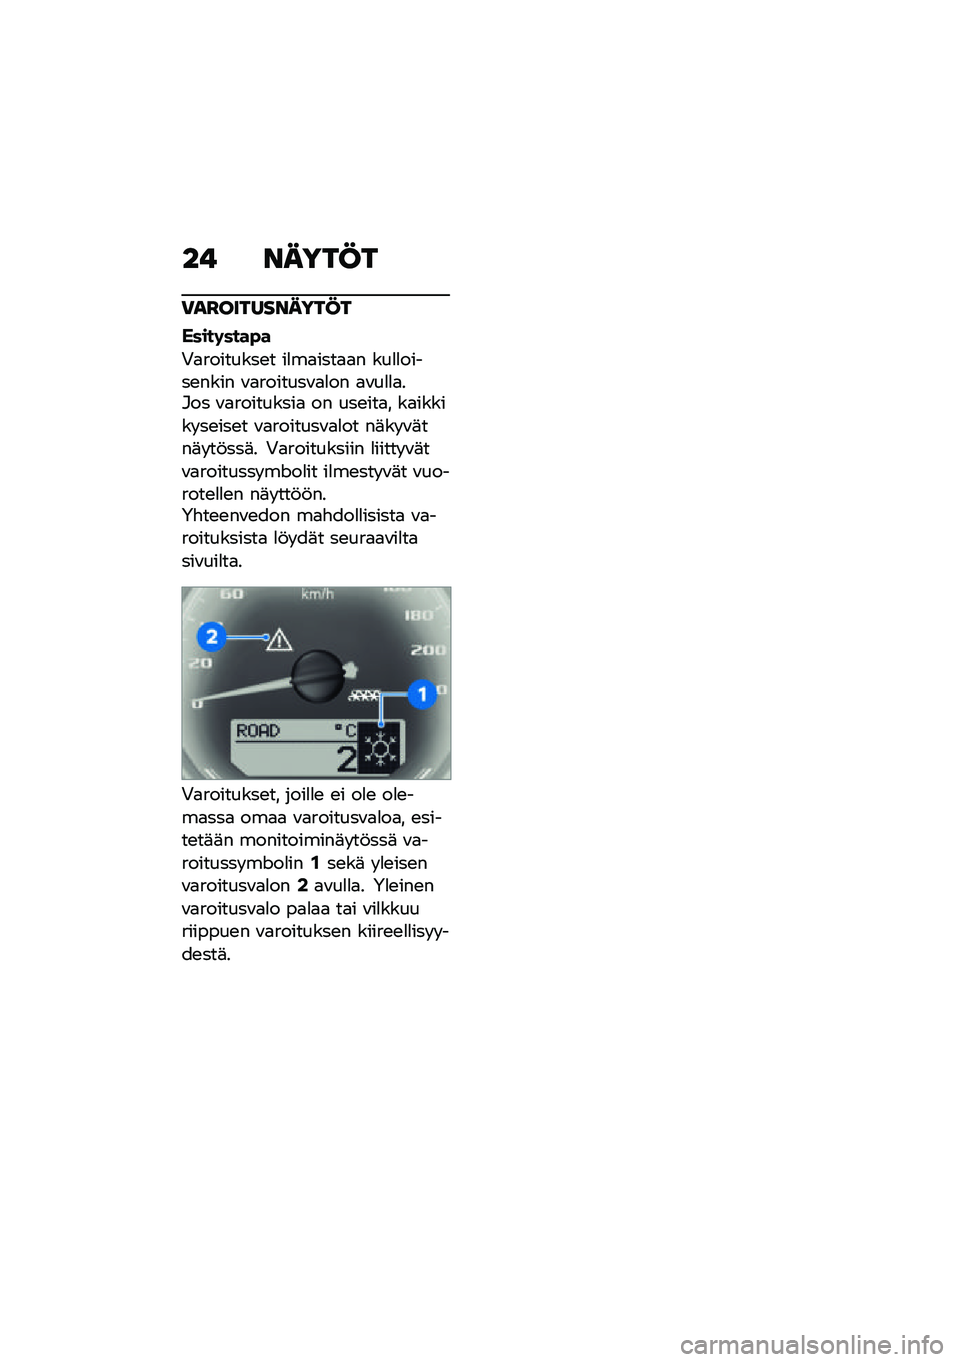 BMW MOTORRAD R NINE T URVAN G/S 2021  Käsikirja (in Finnish) �� �����@�
�)��H����������@�
�=����	����"�
�+�
��������\b� ��
��
����
�
� ���
�
�����\b���� �\f�
�������\f�
�
�� �
�\f��
�
�
��#�� �\f�
��